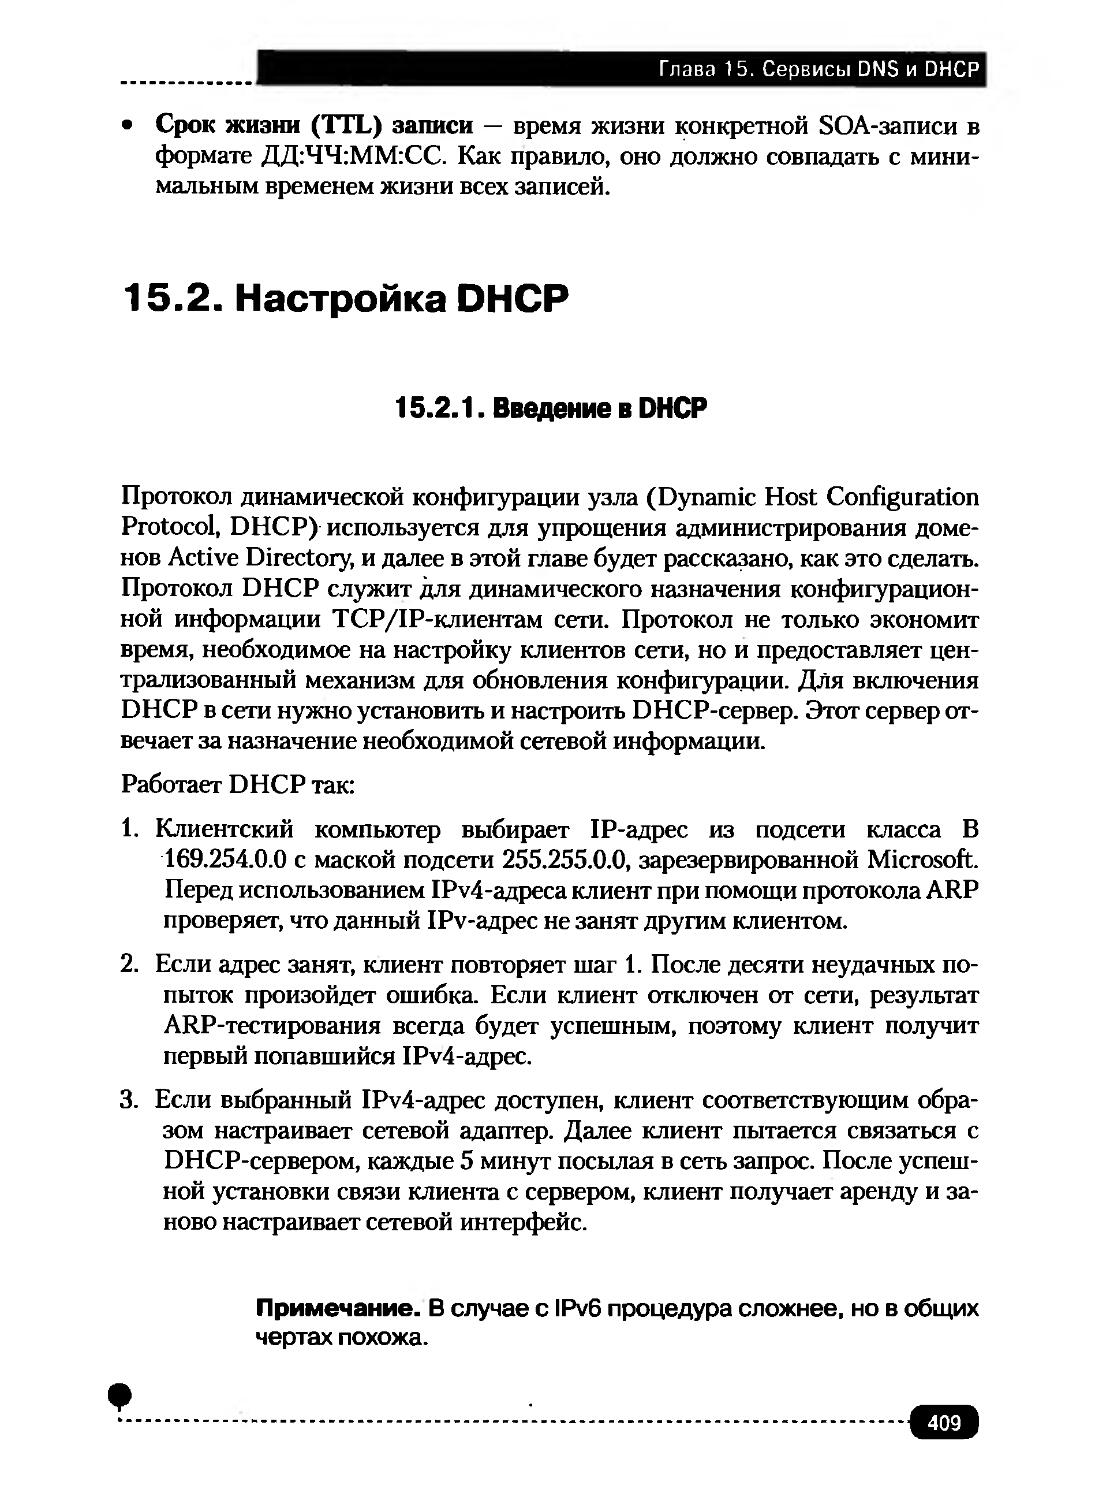 15.2. НАСТРОЙКА DHCP